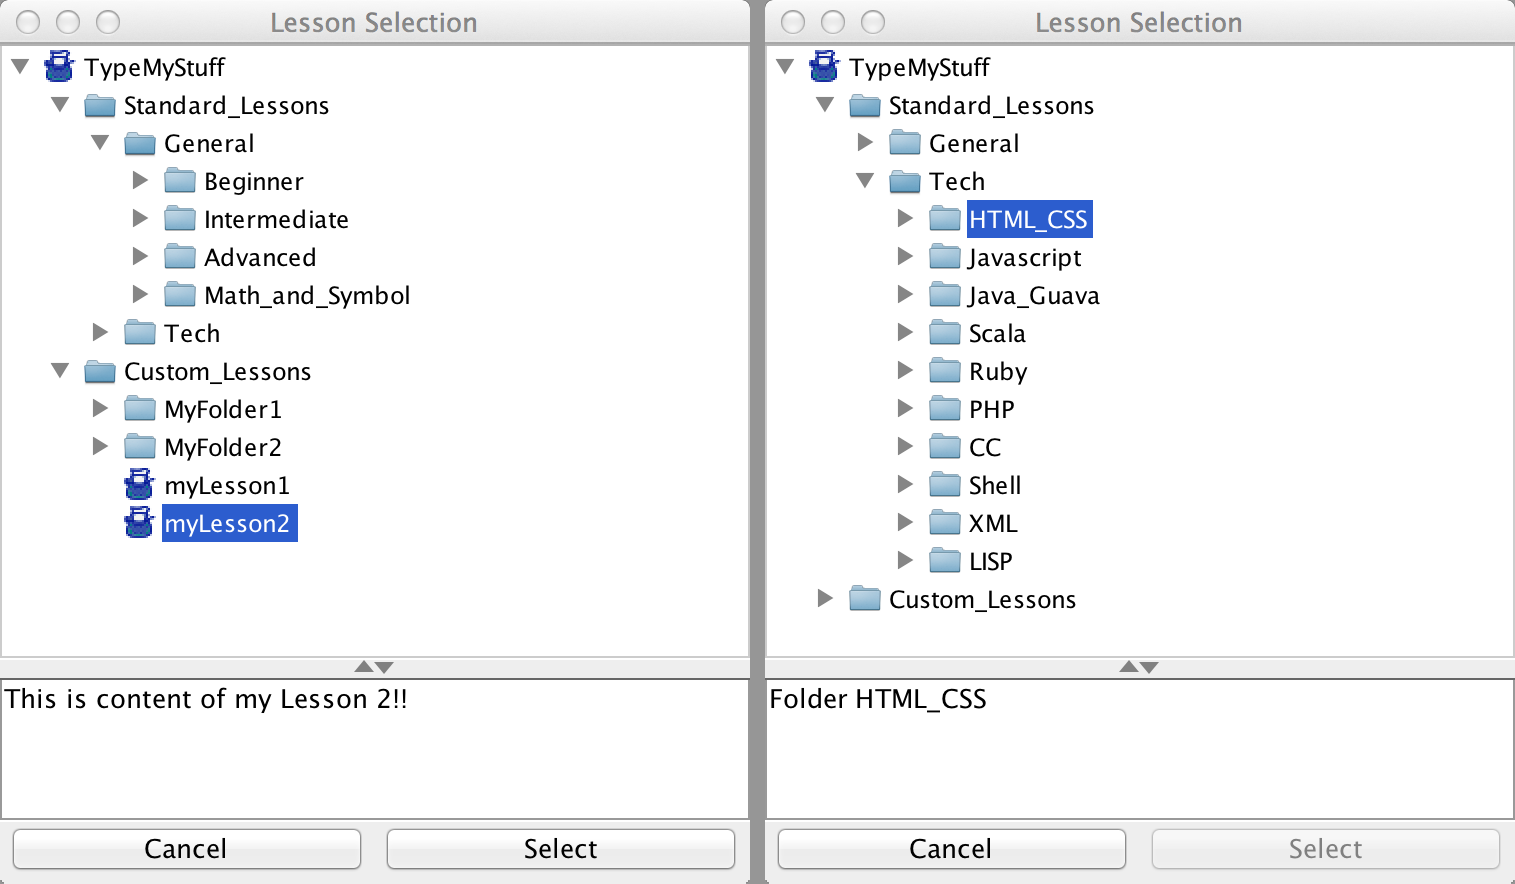 typinator vs typeit4me